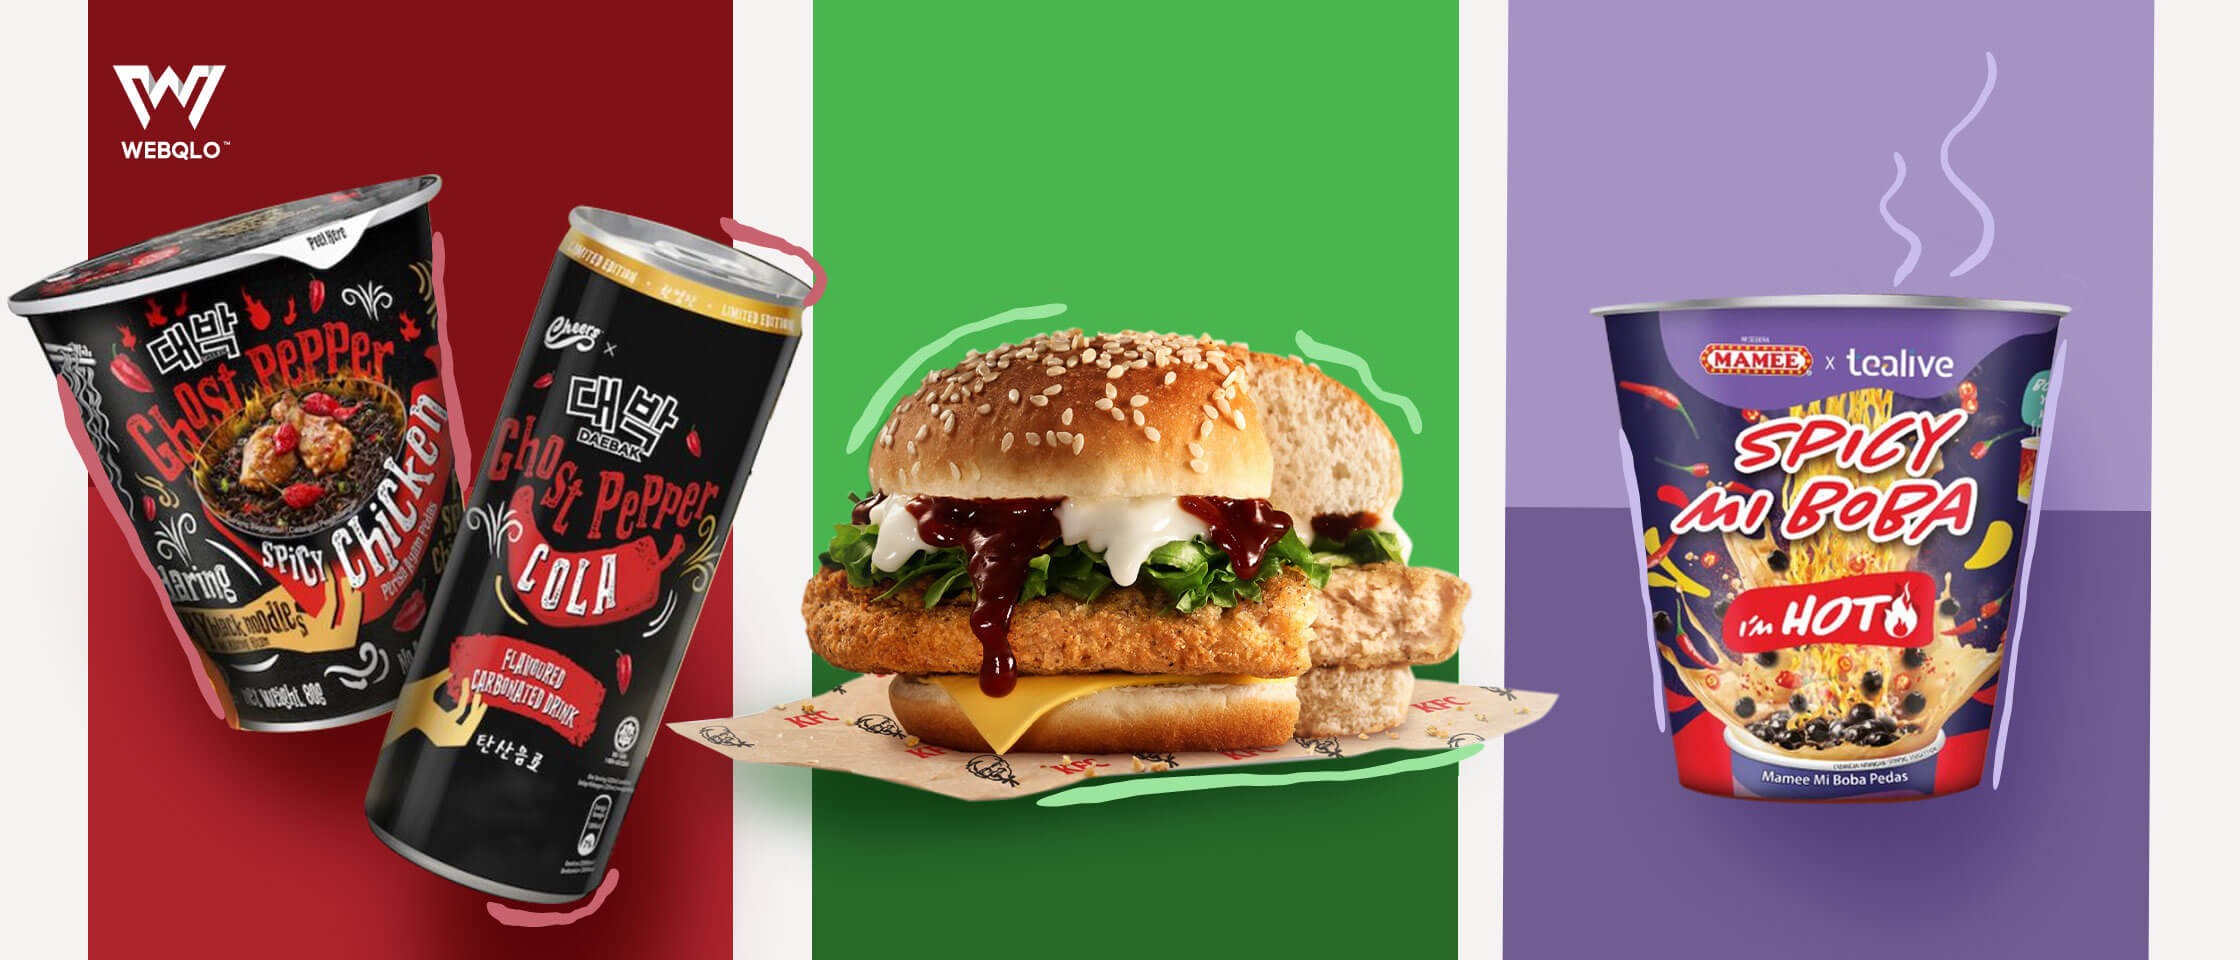 KFC's Zero Chicken Burger, Daebak's Ghost Pepper Cola, and Tealive's Spicy Mi Boba